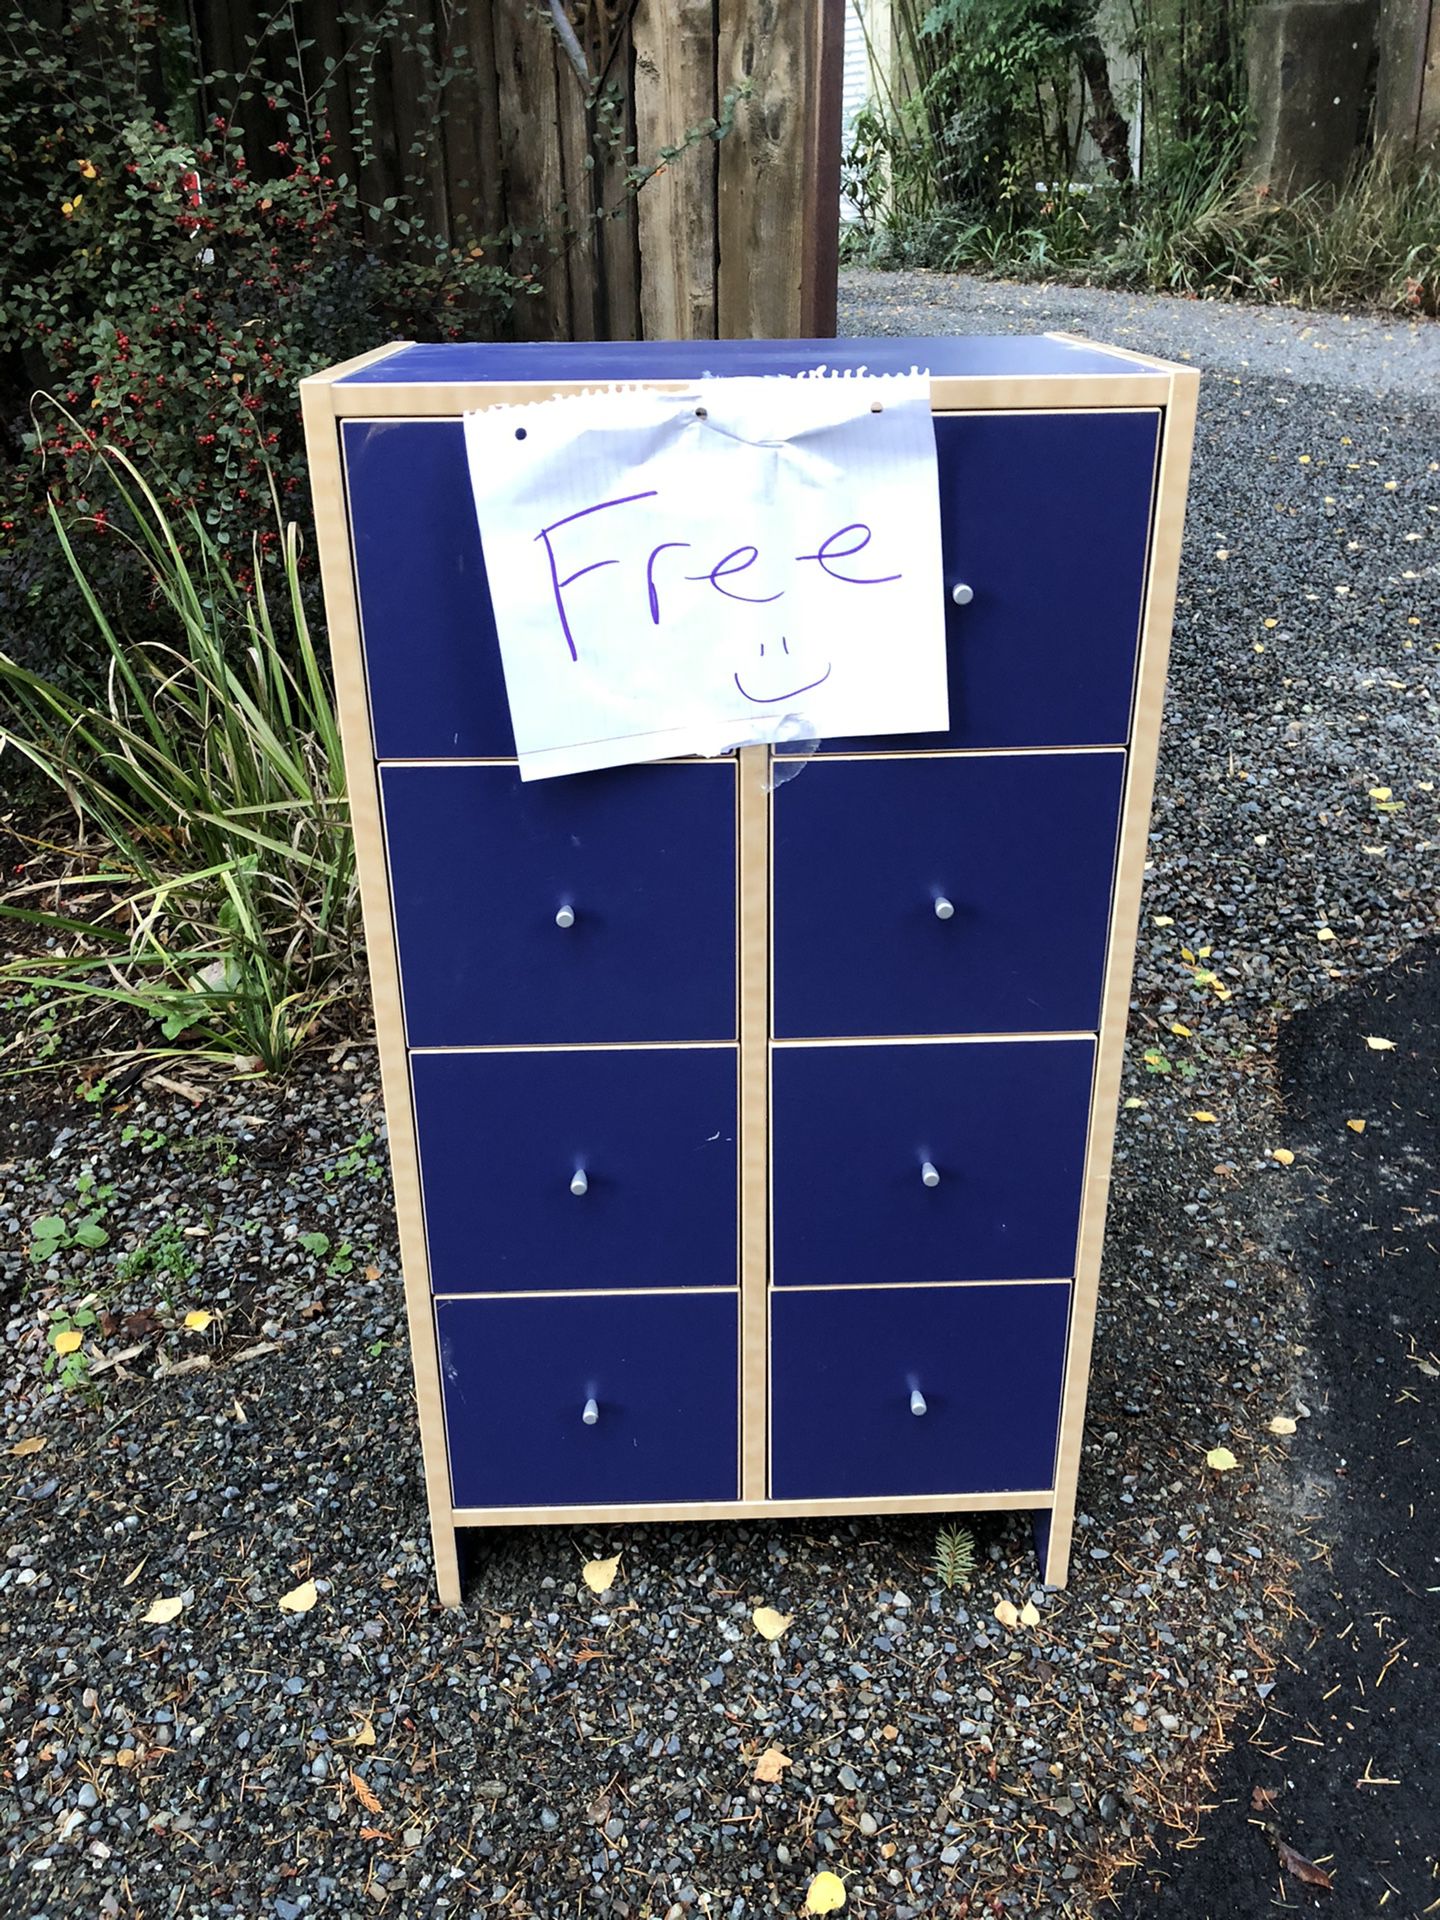 Free Dresser